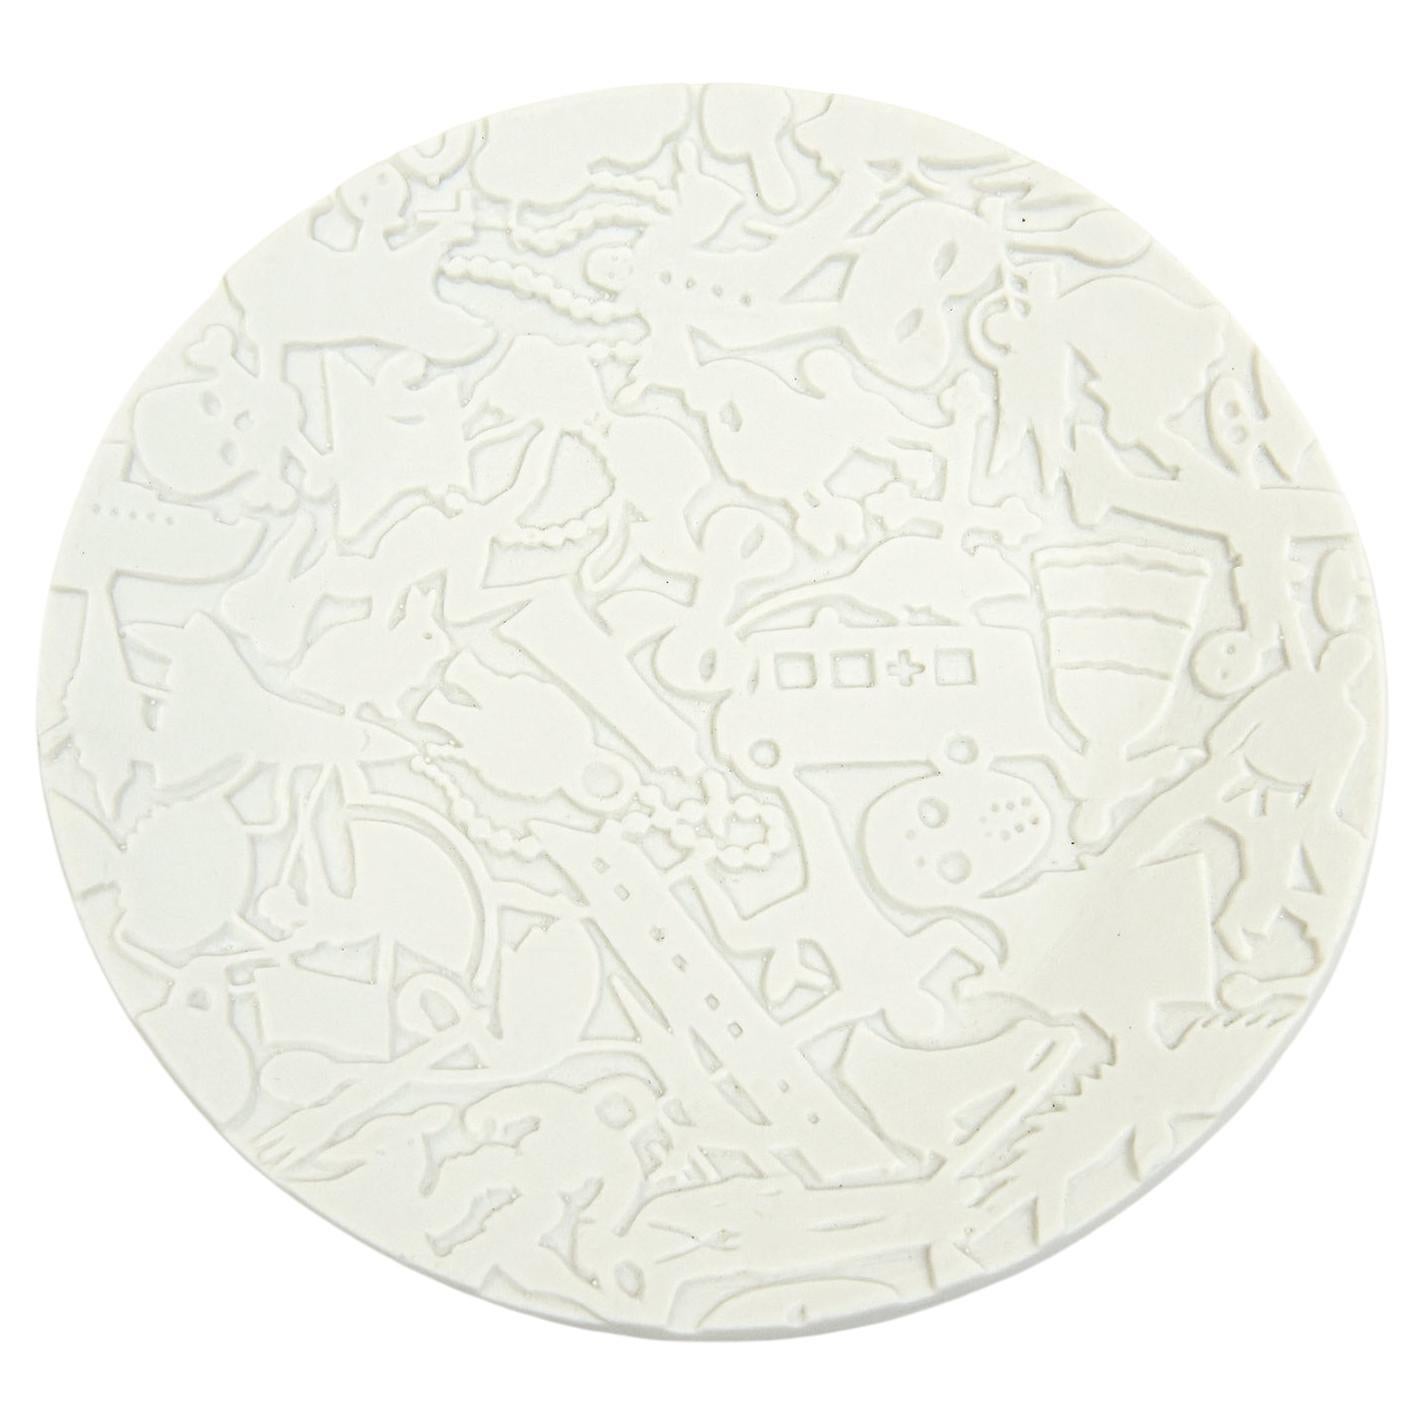 Studio Job for Makkum Pottery Textural Relief White Matt Porcelain Plate